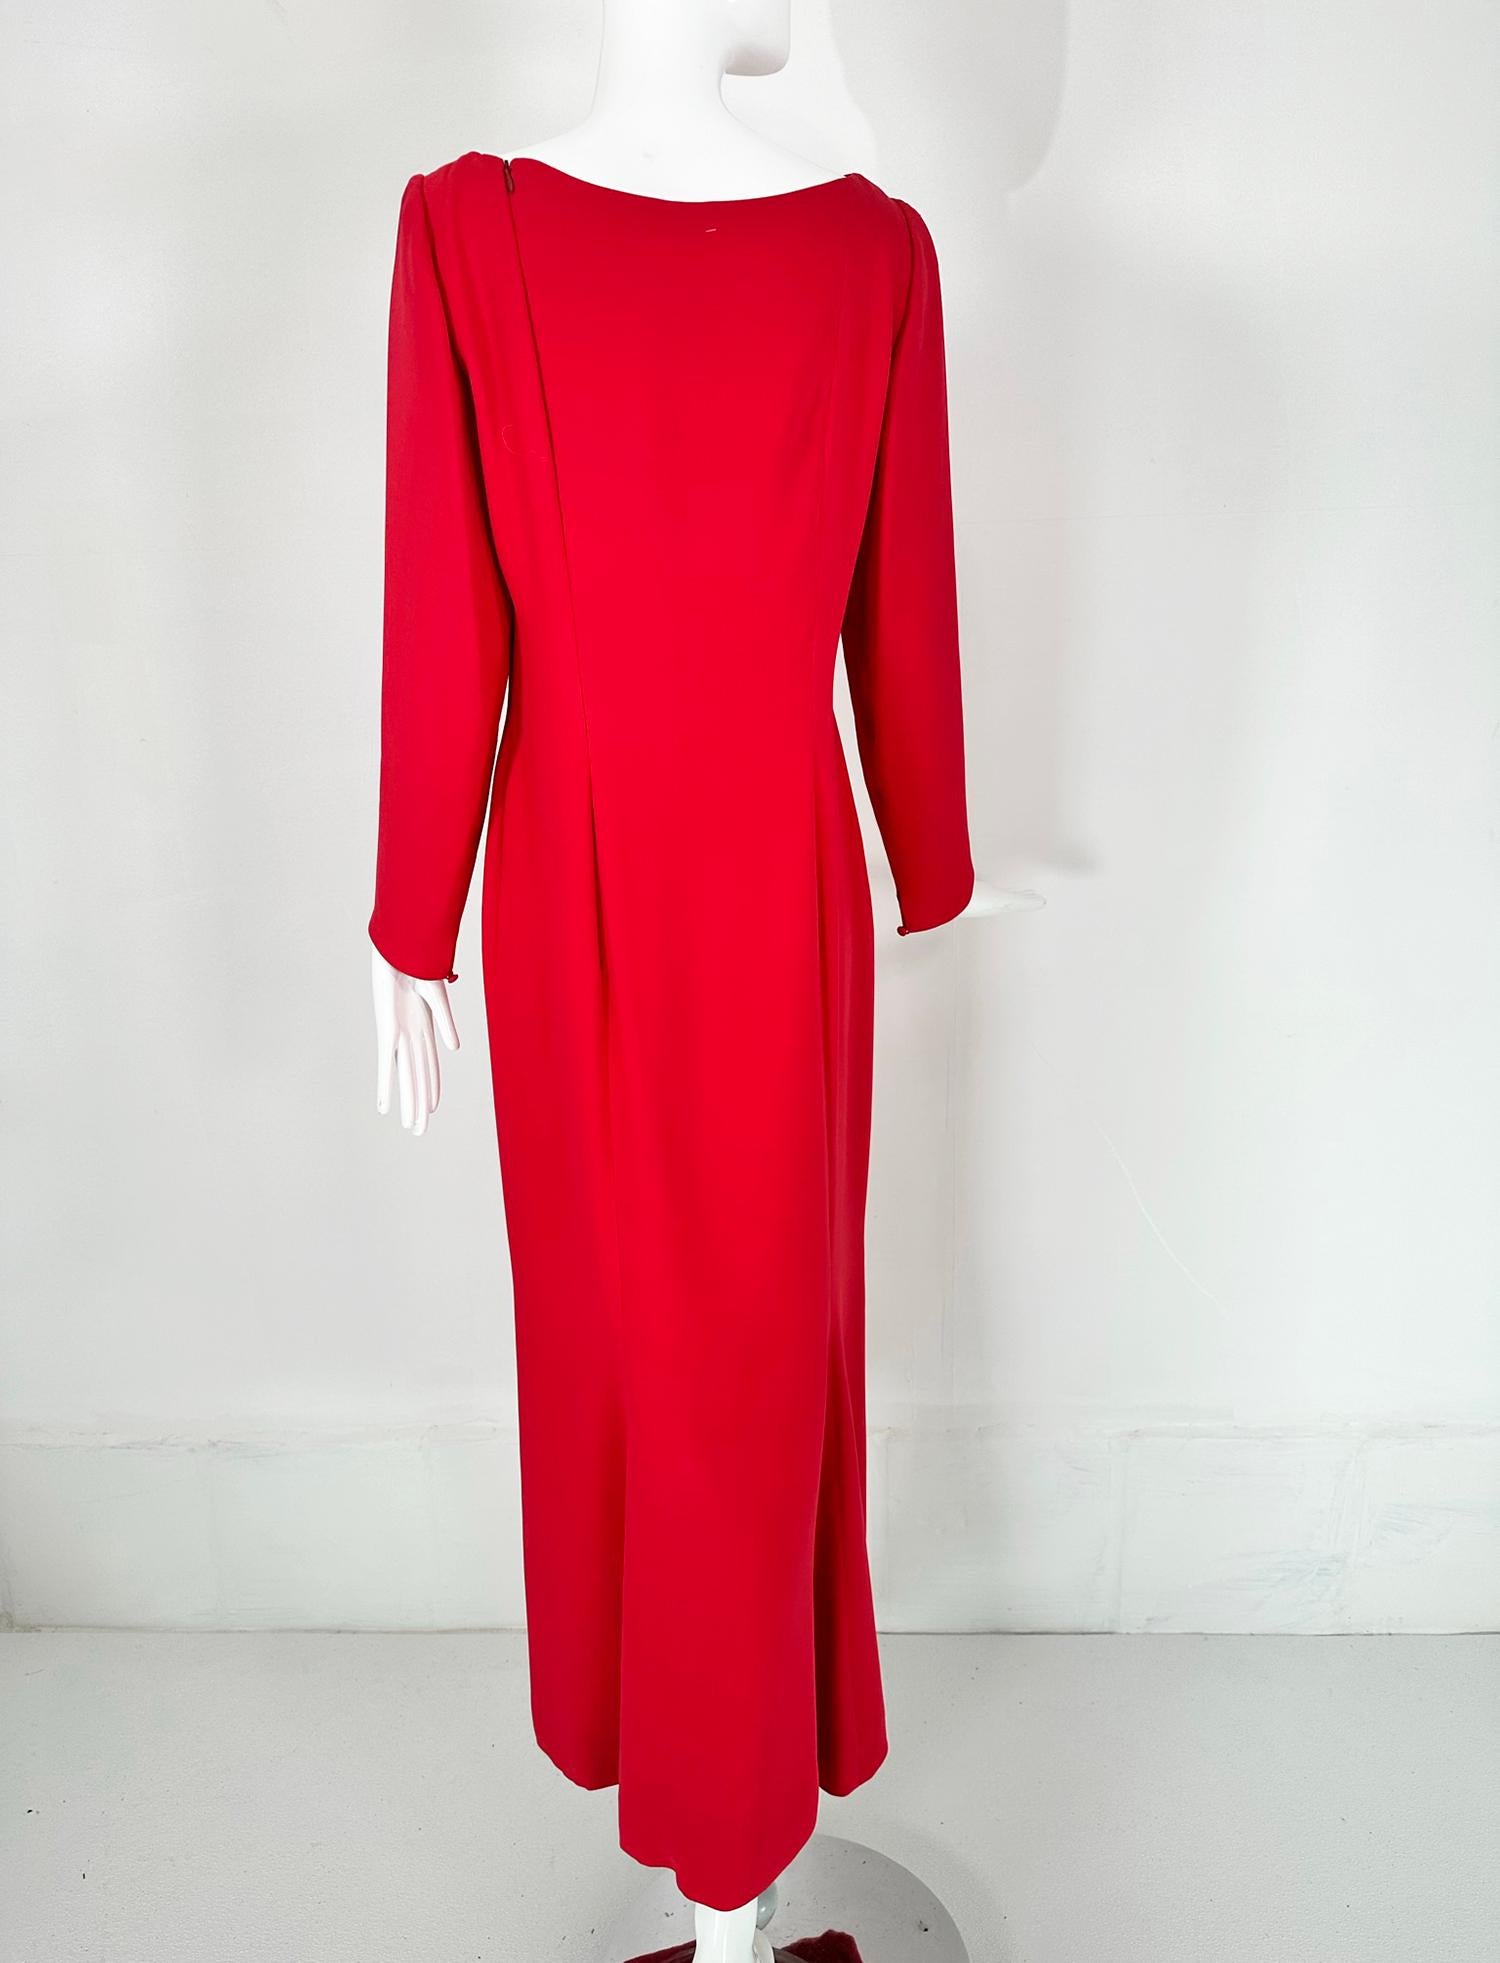 Oscar de la Renta Coral Red Silk Long Sleeve Bateau Neck Column Evening Dress 8 For Sale 3